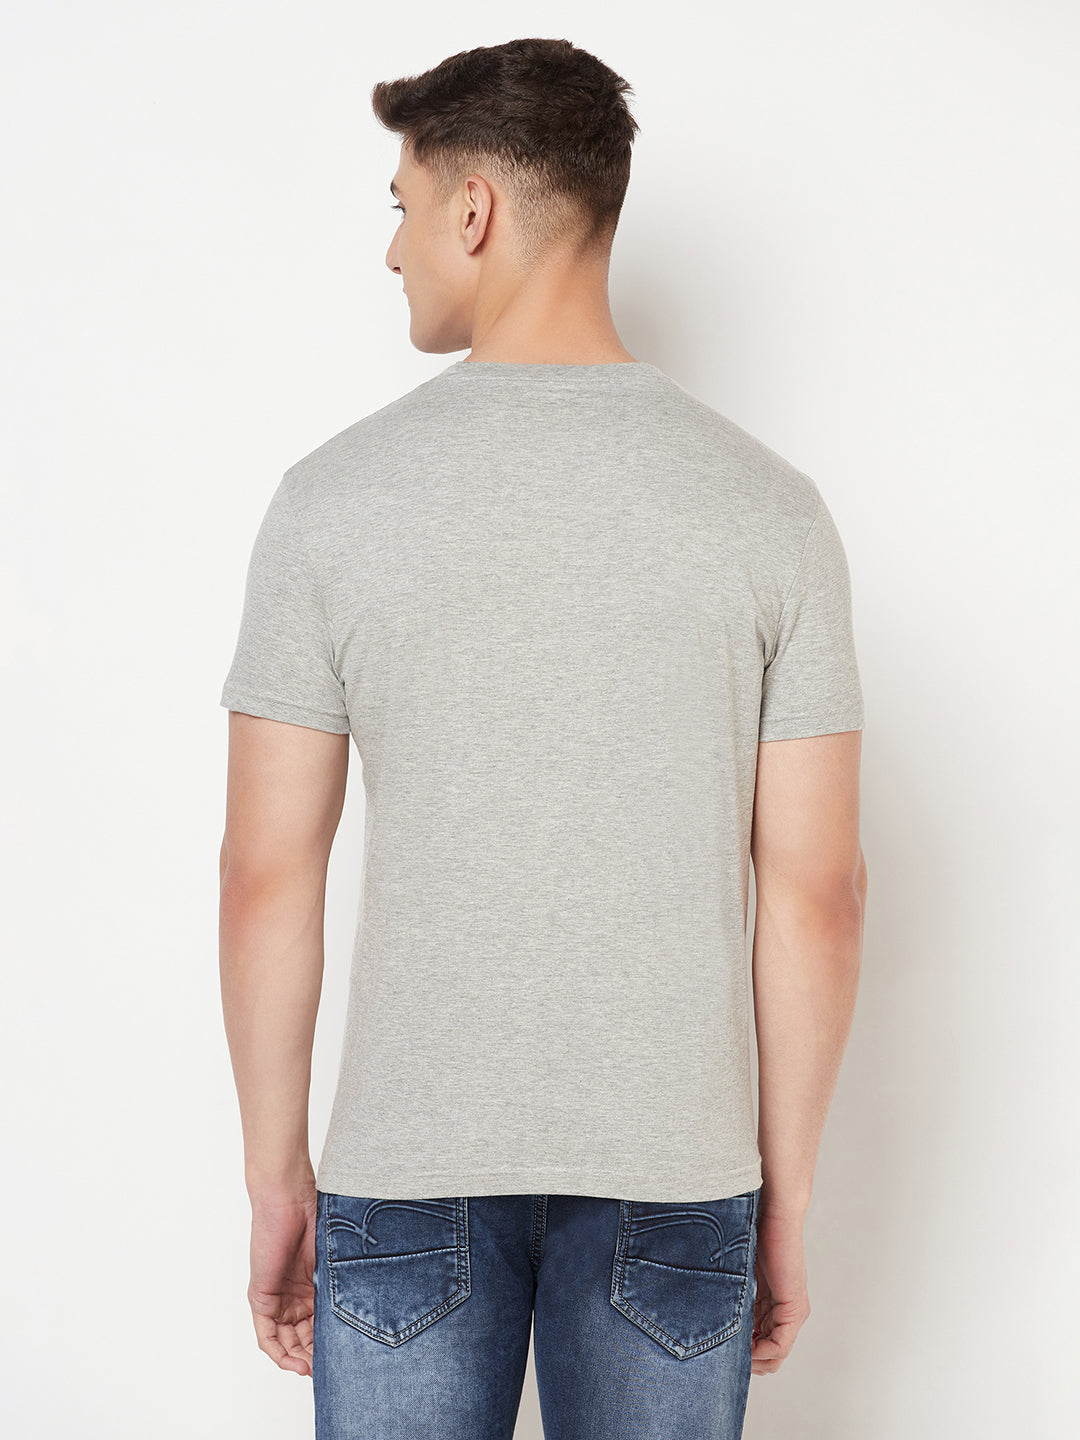 Premium Cotton Tshirts  (Pack of 2- Grey,Blue)